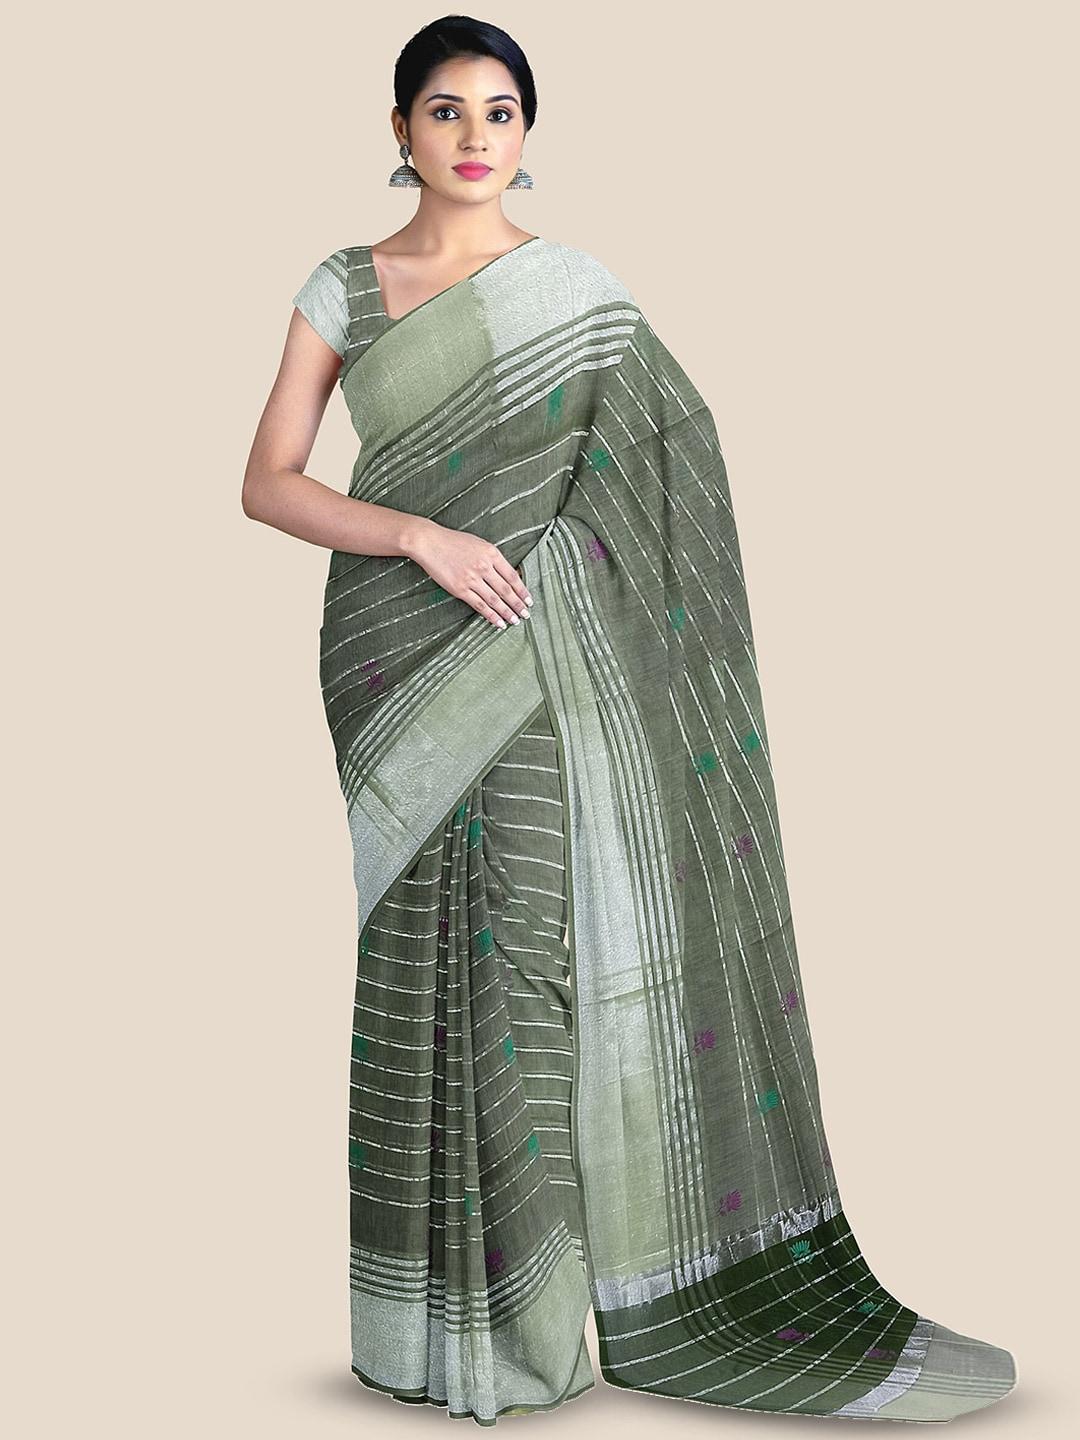 The Chennai Silks Striped Sambalpuri Saree